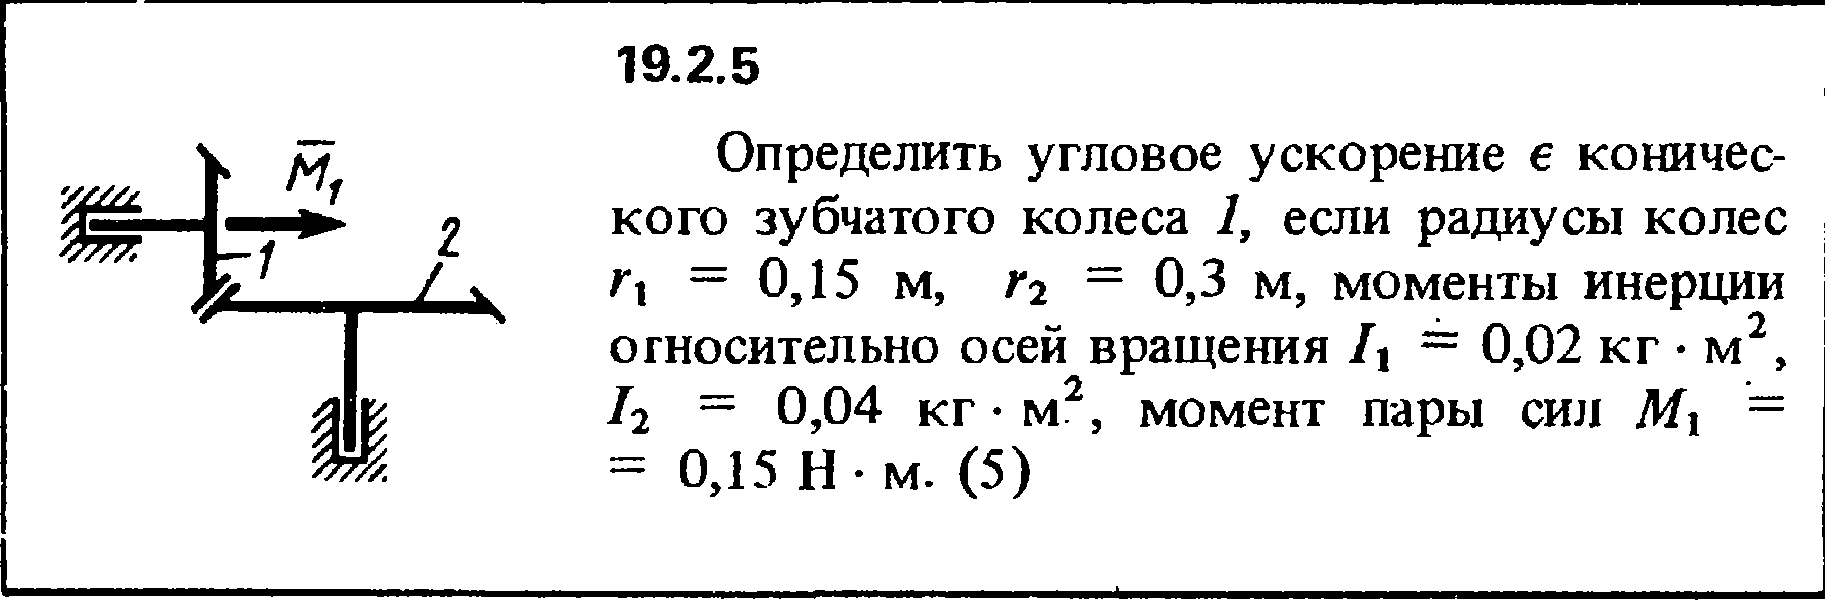 Решение 19.2.5 из сборника (решебника) Кепе О.Е. 1989